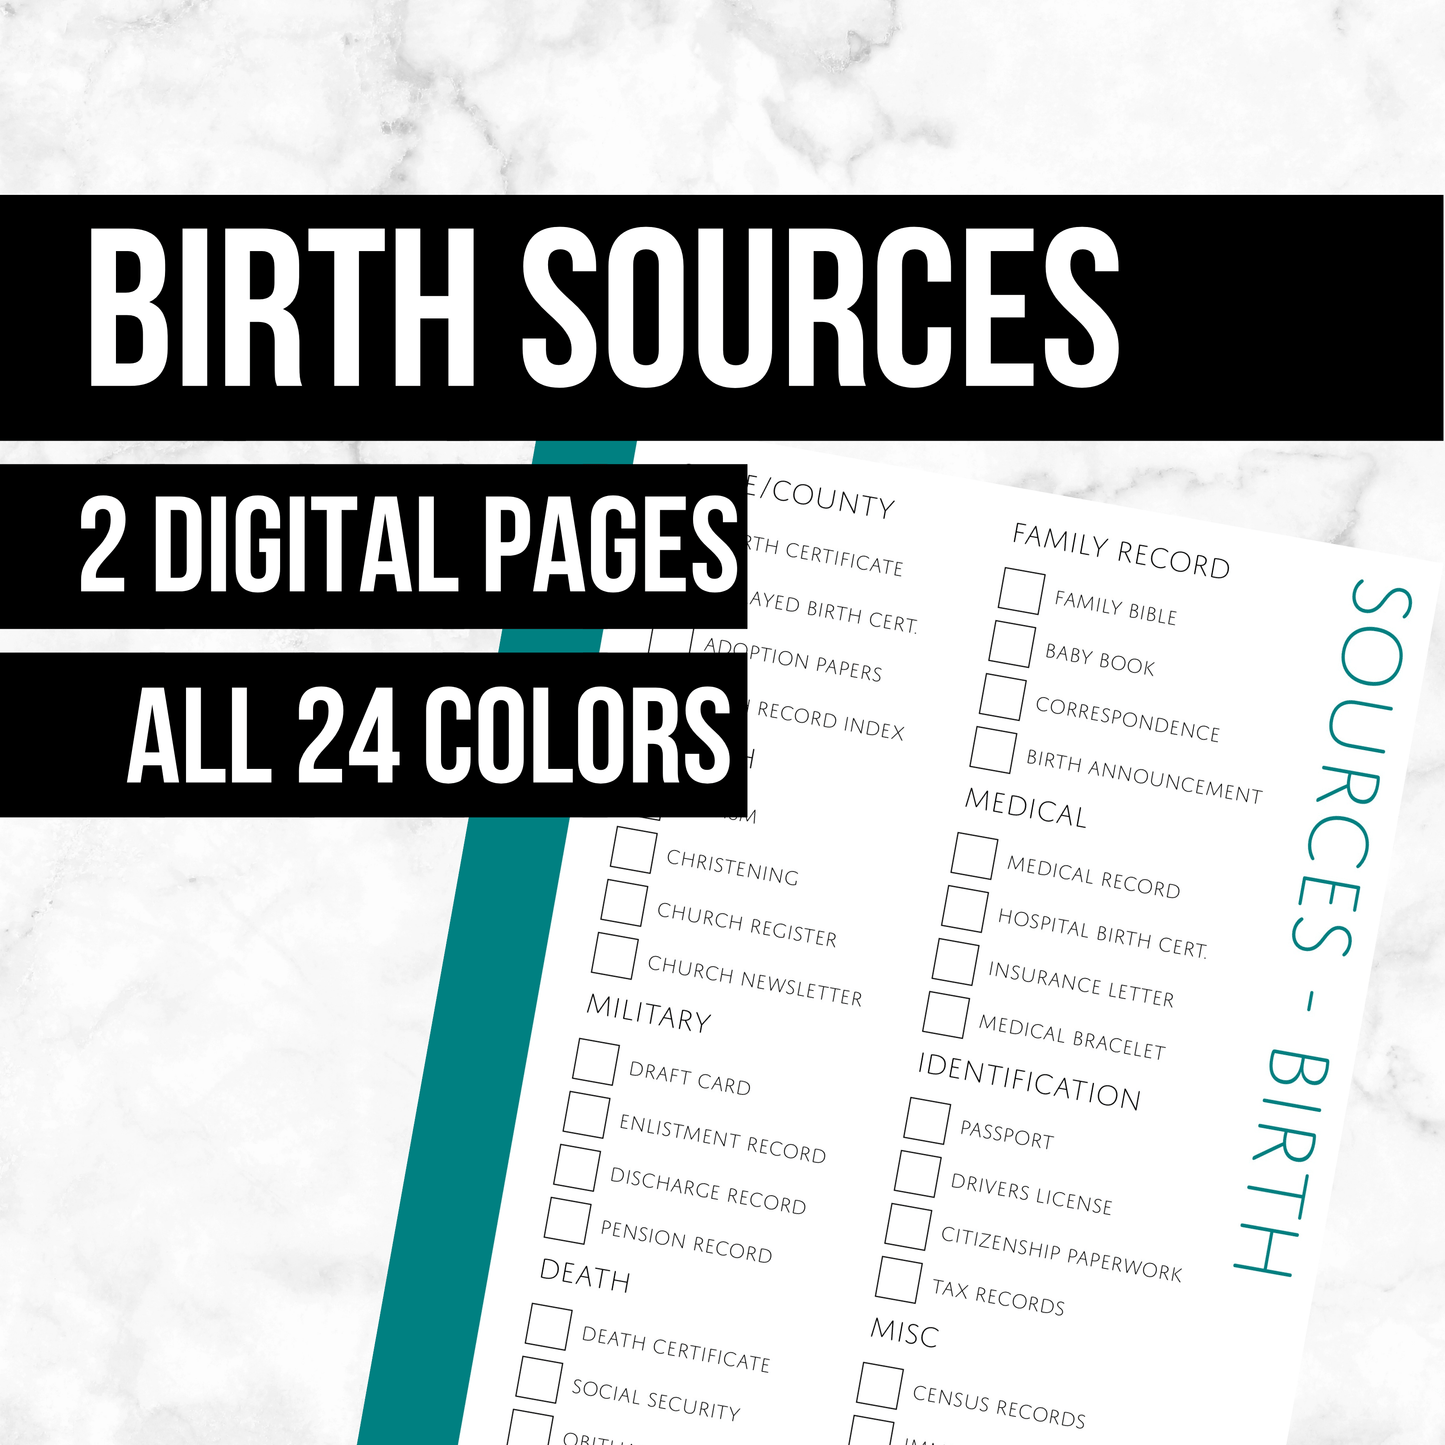 Birth Sources Checklist: Printable Genealogy Form (Digital Download)